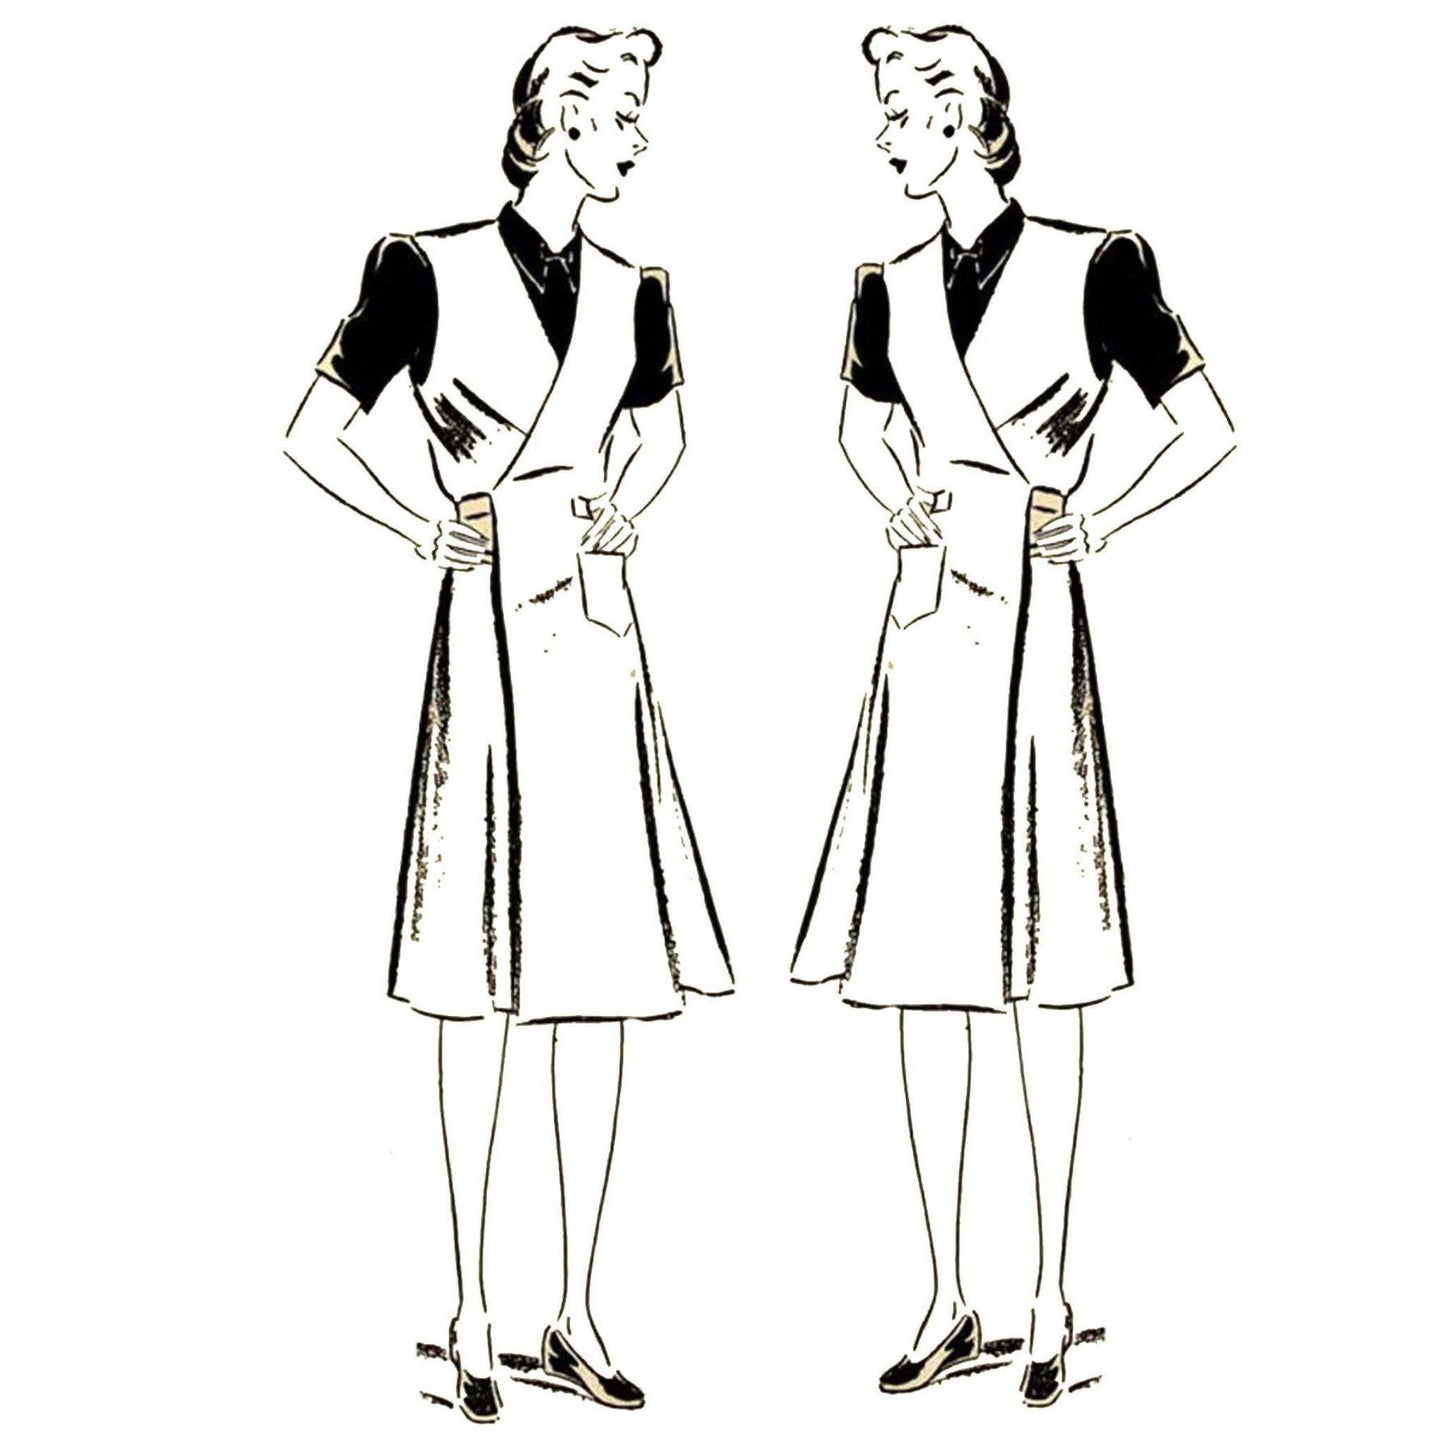 Women wearing a Women's Apron, Duster, Overalls, Pinny